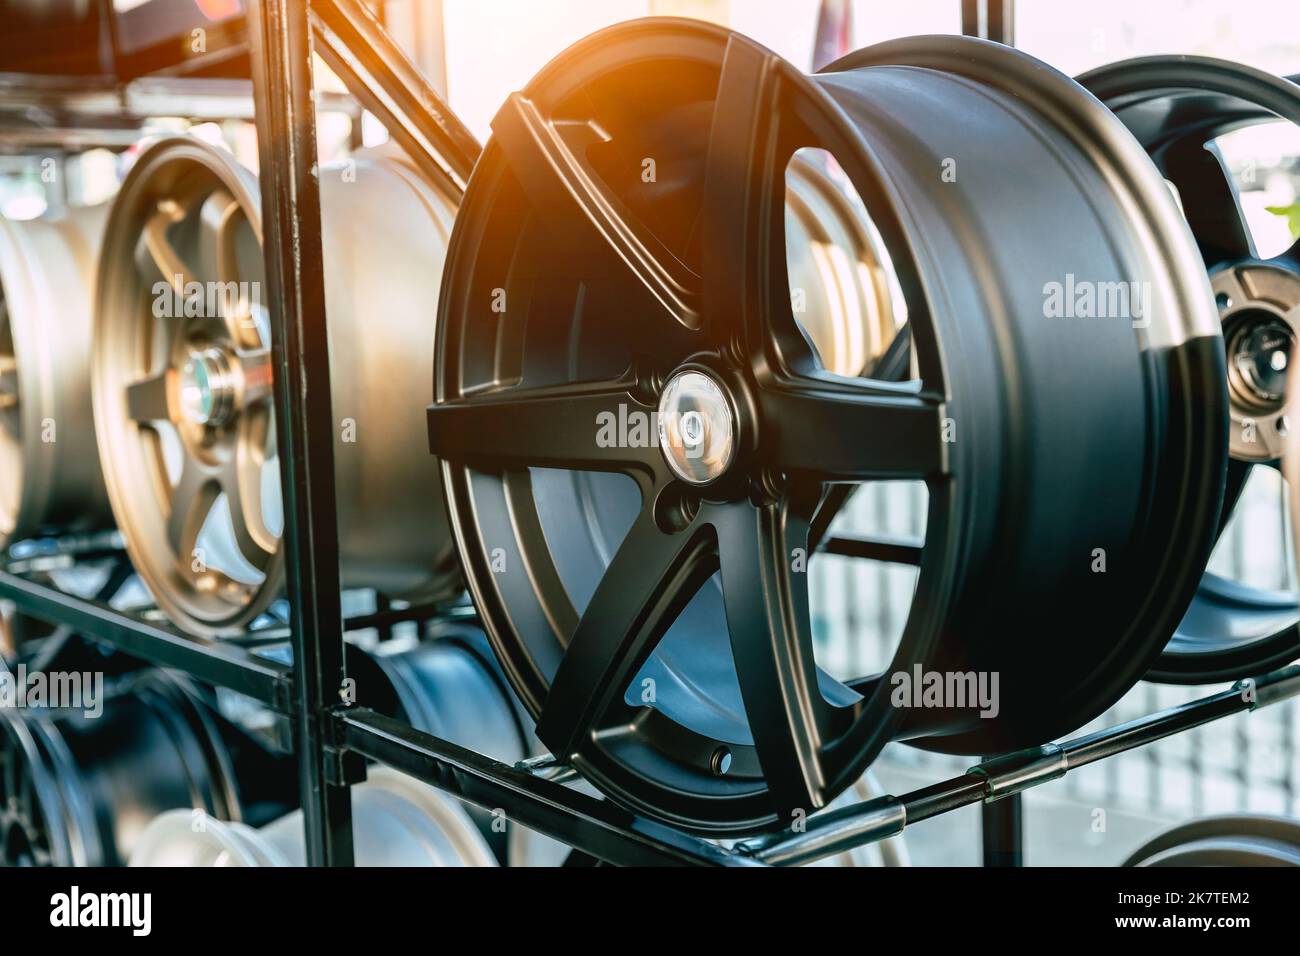 sport luxury alloy wheel car rims in garage store for sale Stock Photo